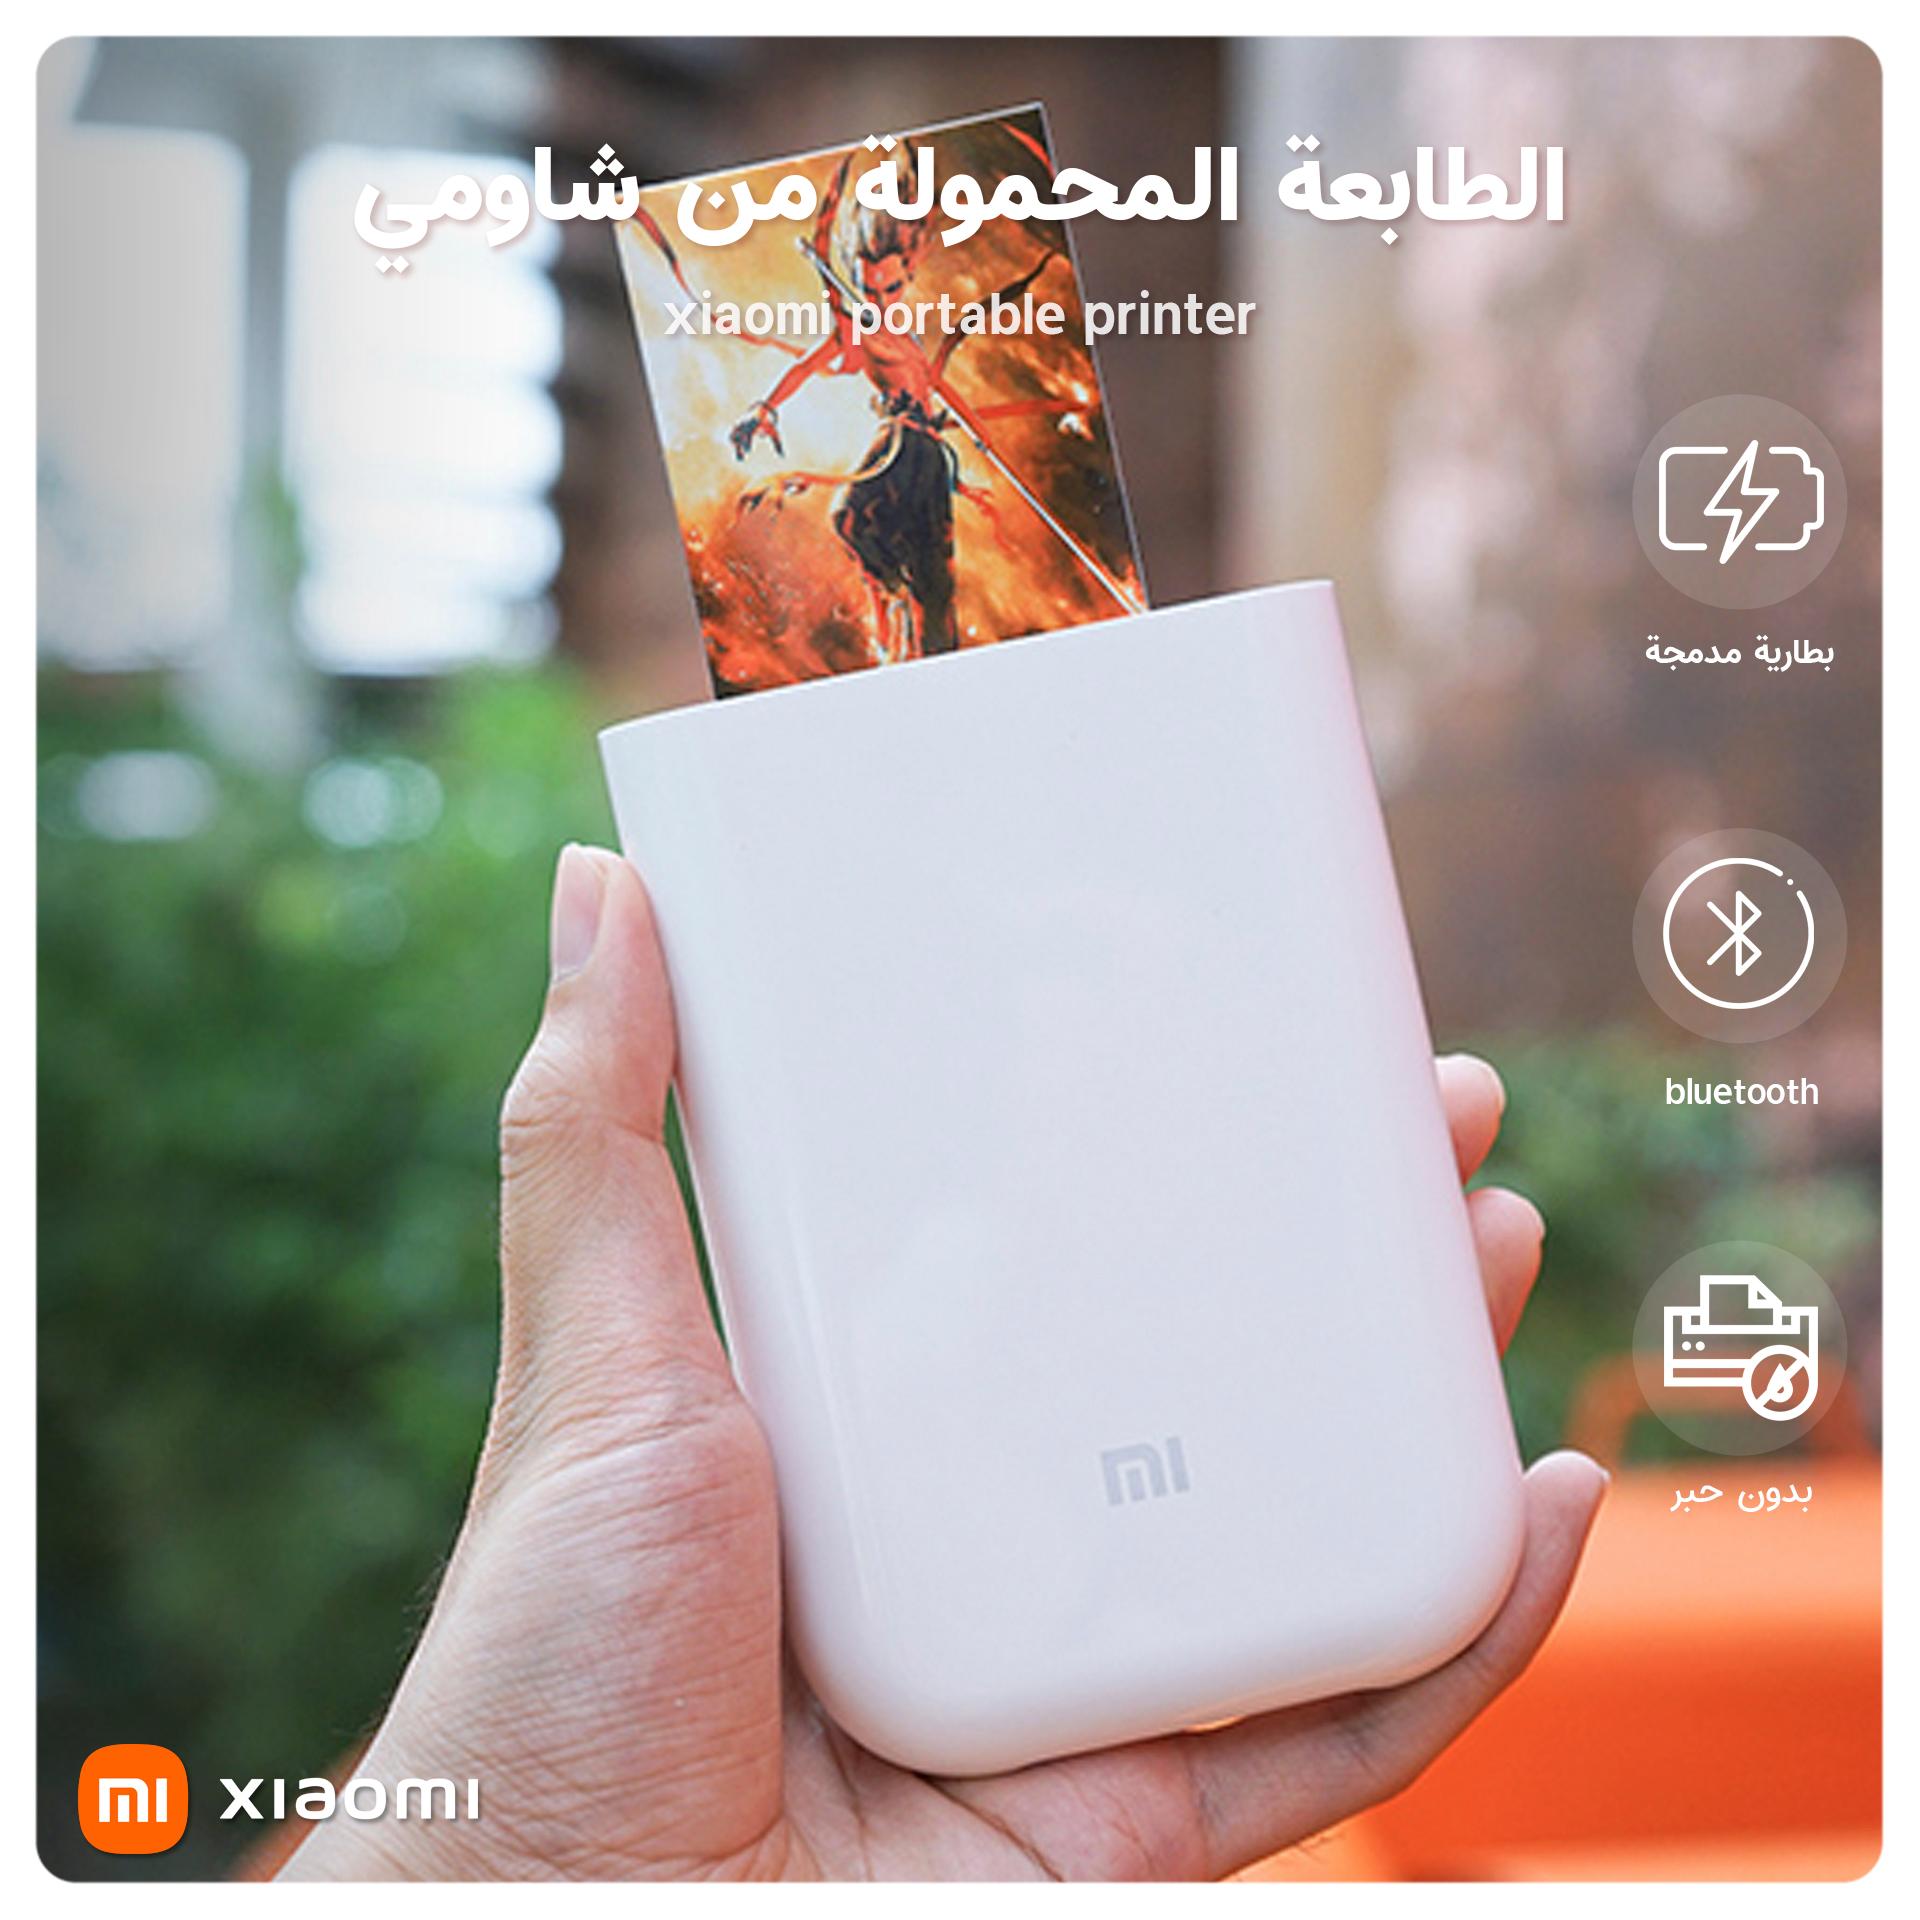 Xiaomi 3 Inch Pocket 300 Dpi Ar Zink Bluetooth Photo Printer White